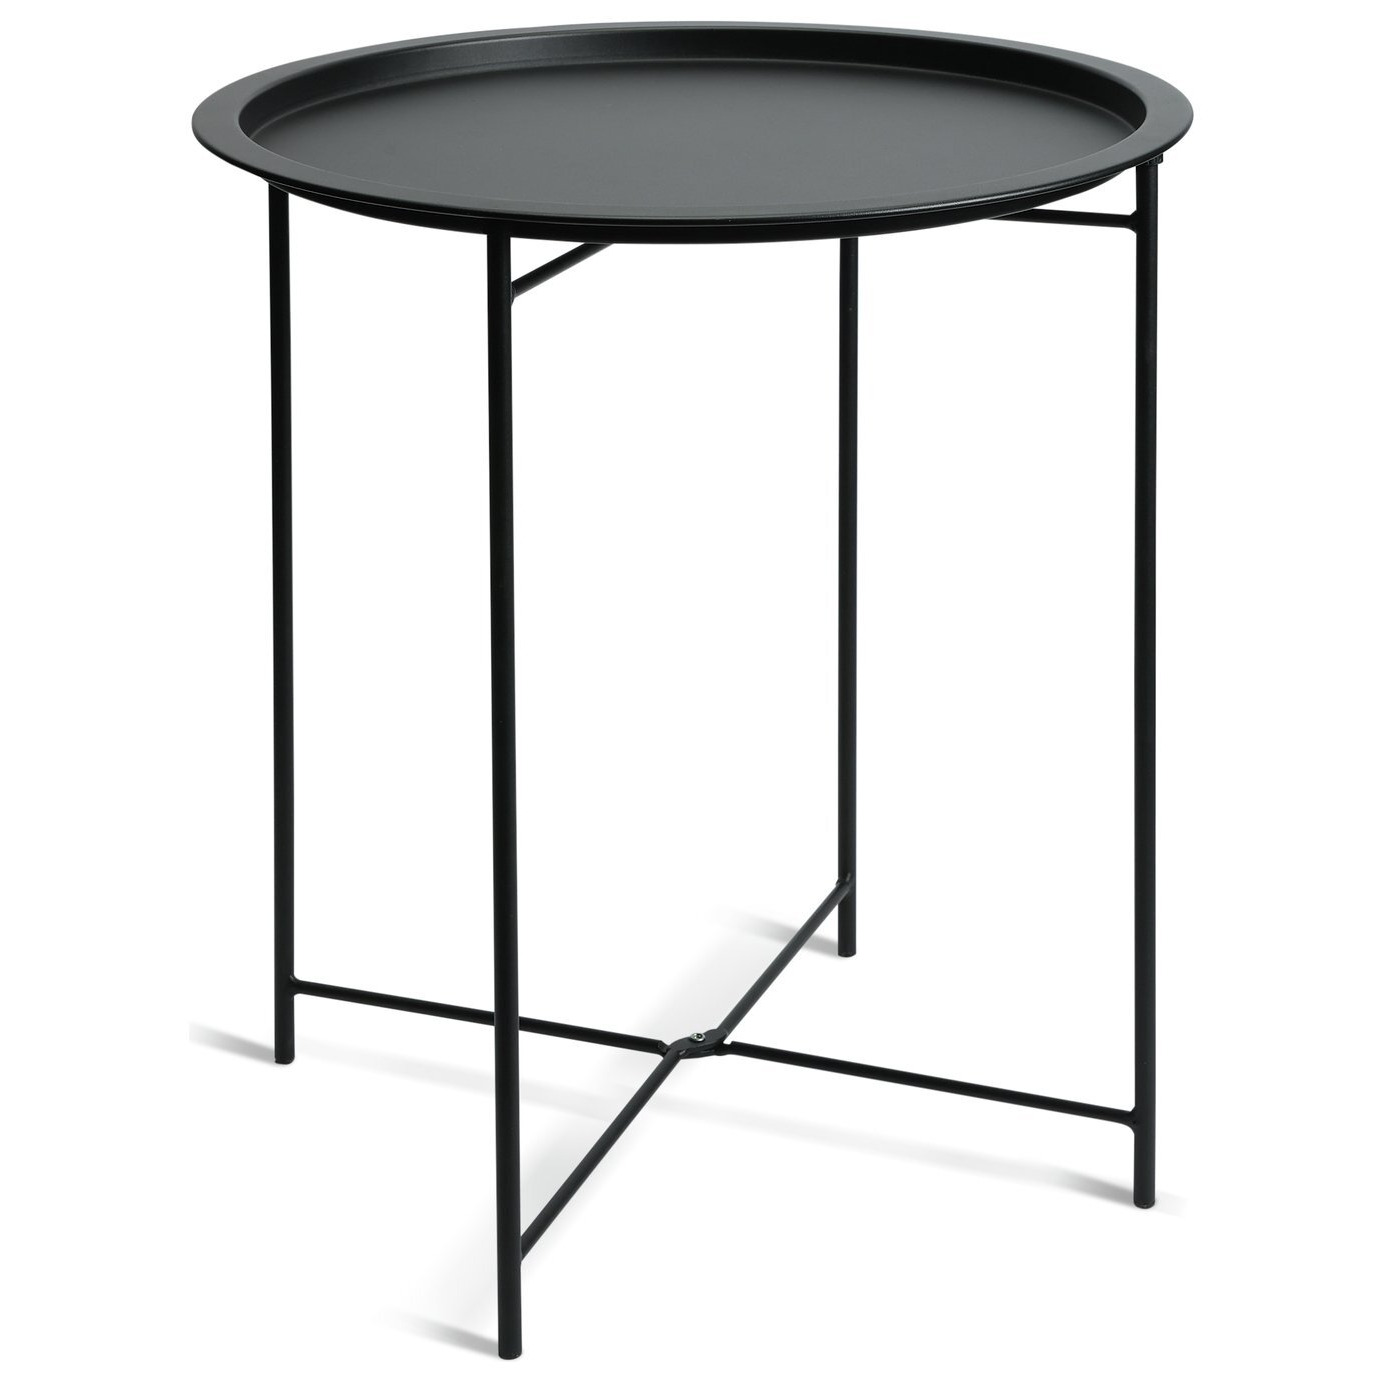 Habitat Pula Folding Metal Side Table - Black - image 1